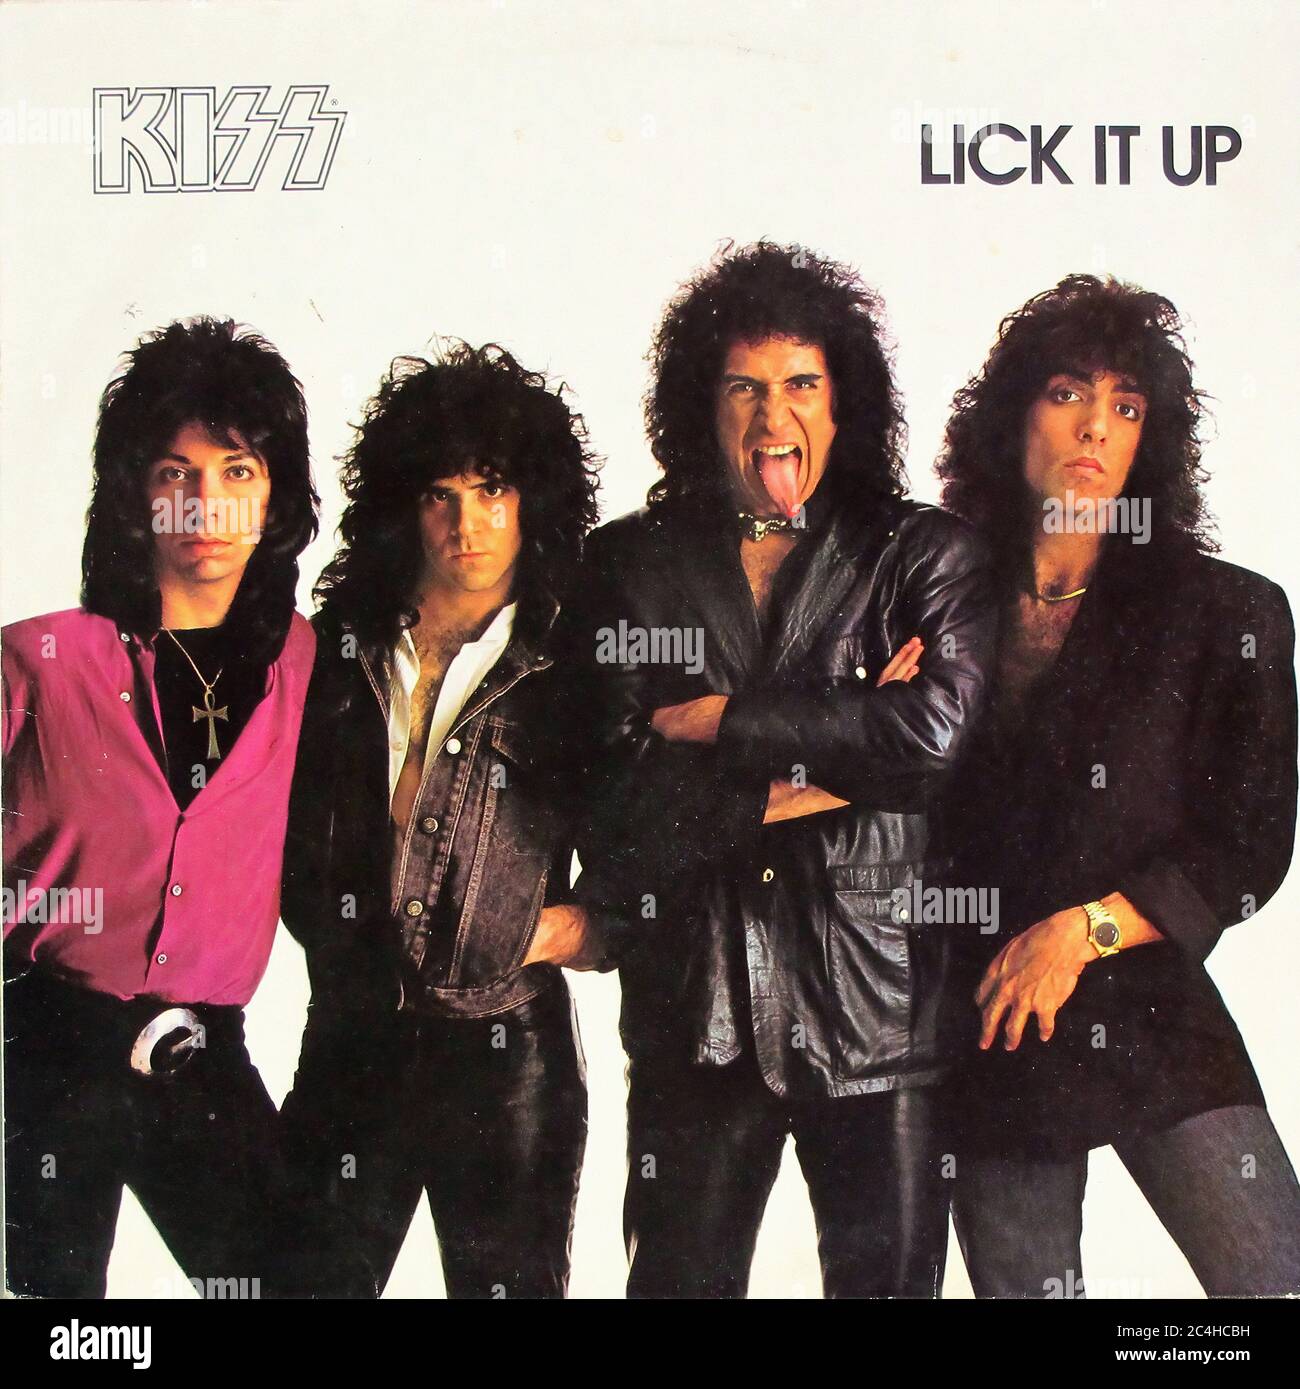 Kiss Lick IT UP 12'' LP Vinyl - copertina vintage Foto stock - Alamy